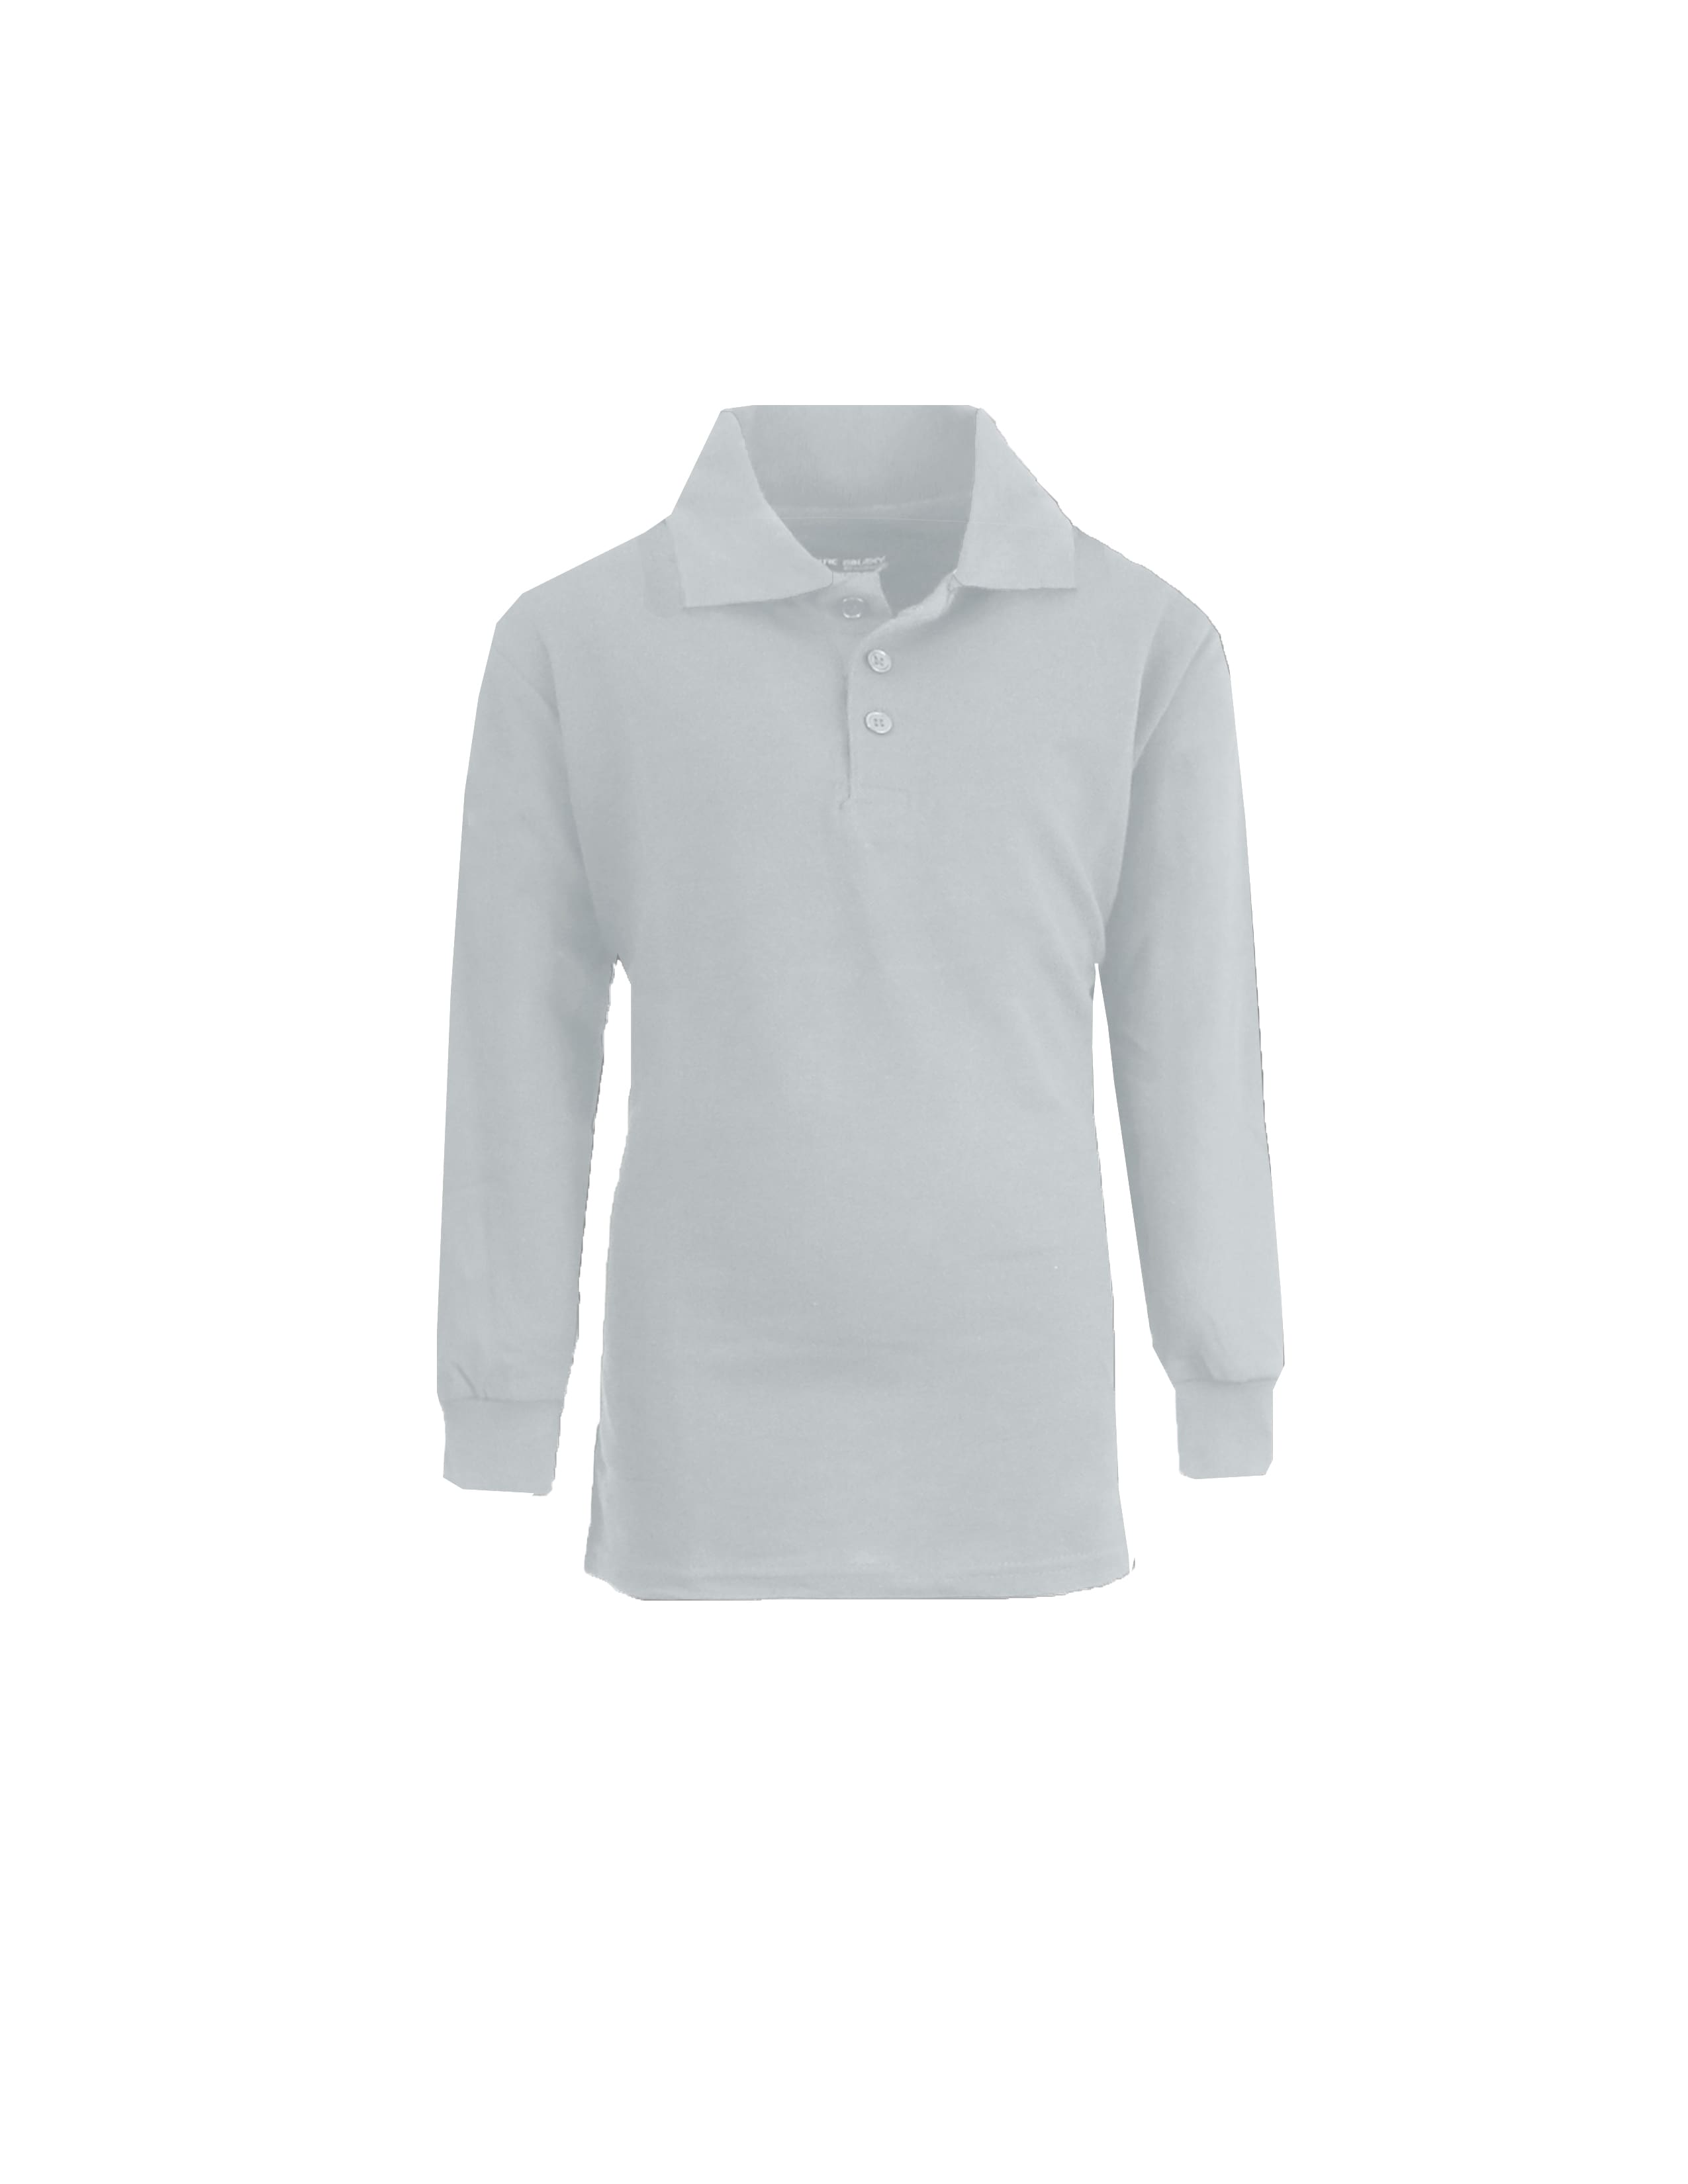 Galaxy by Harvic Long Sleeve Boy's School Uniform Pique Polo Shirt ...